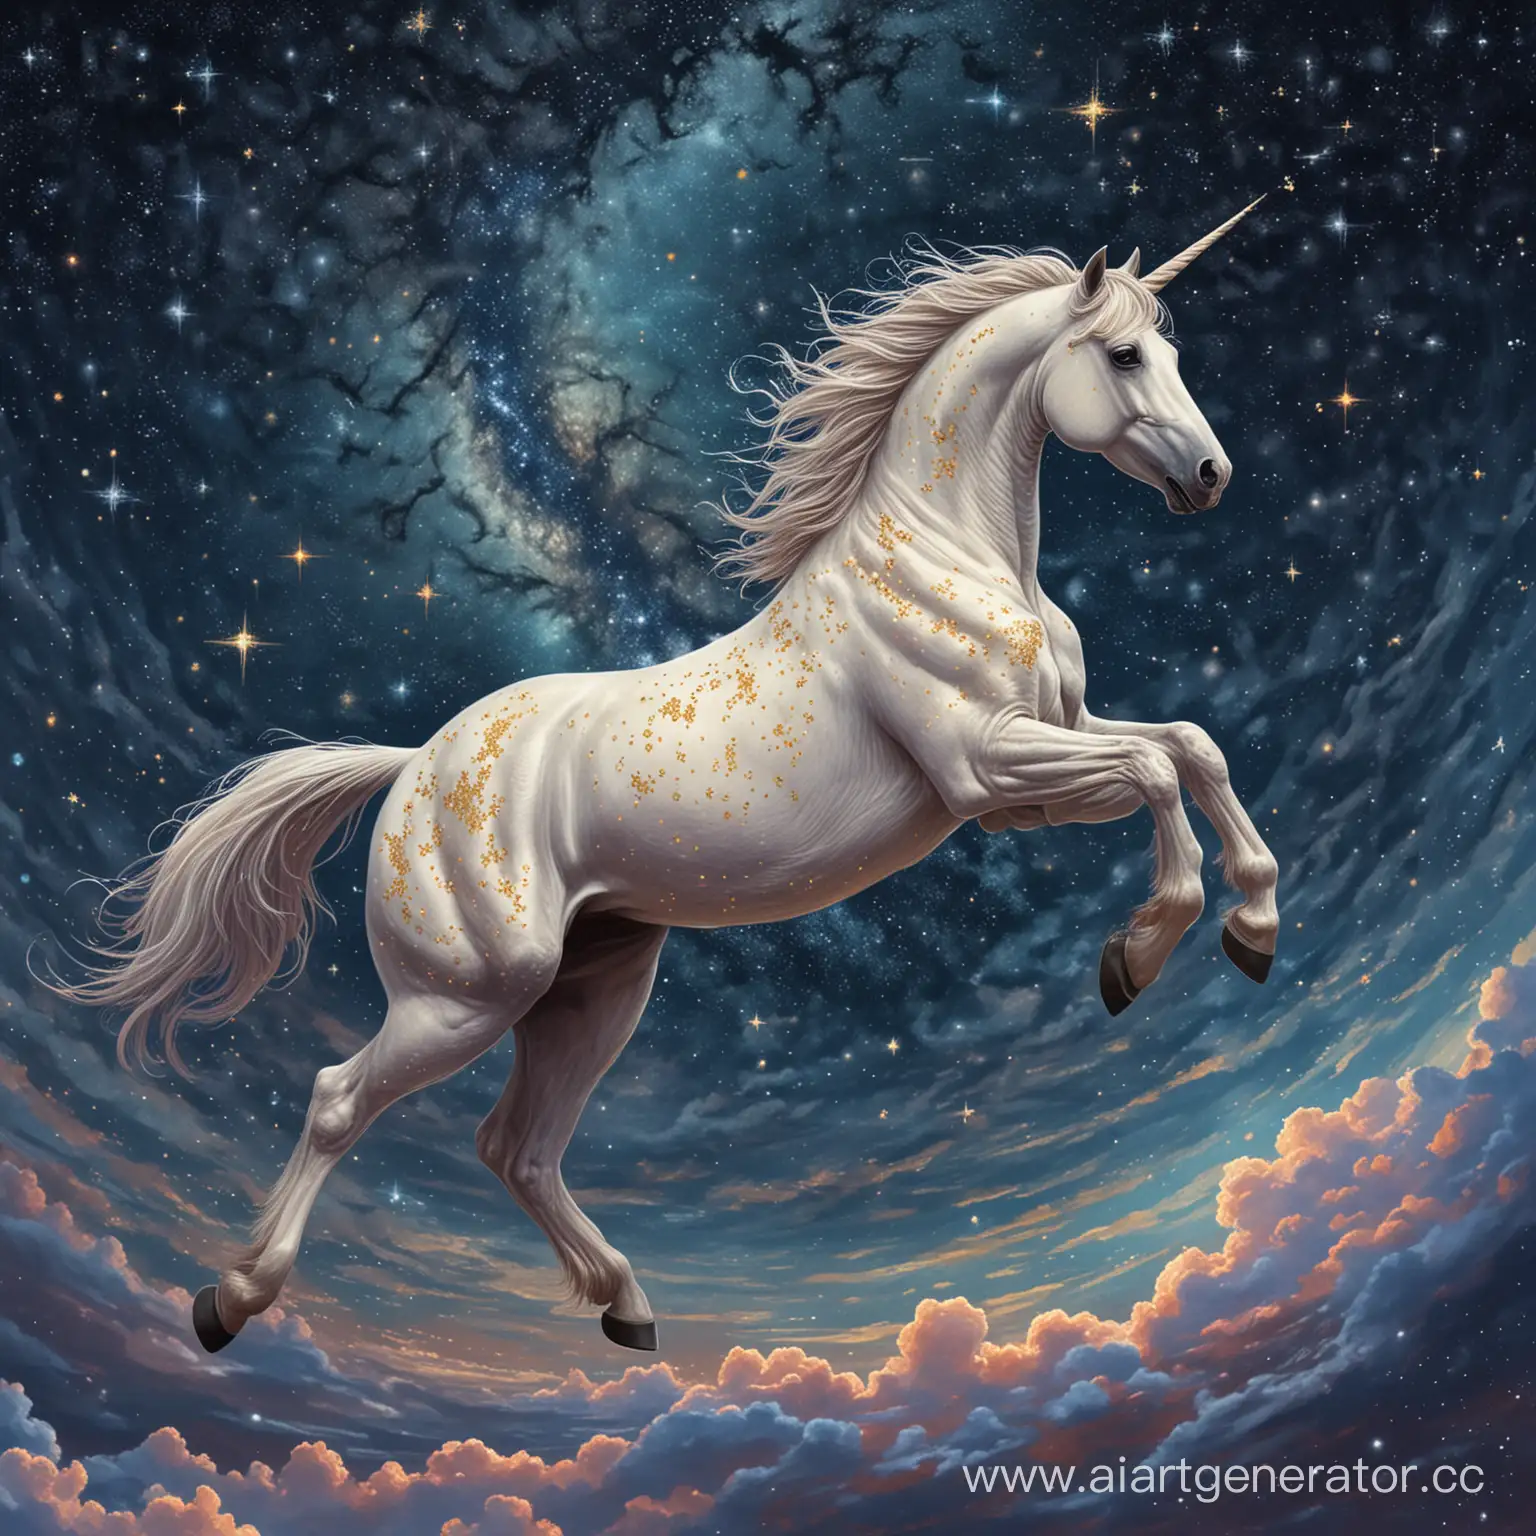 Mystical-Flight-Riding-a-Starry-Horse-Through-the-Night-Sky